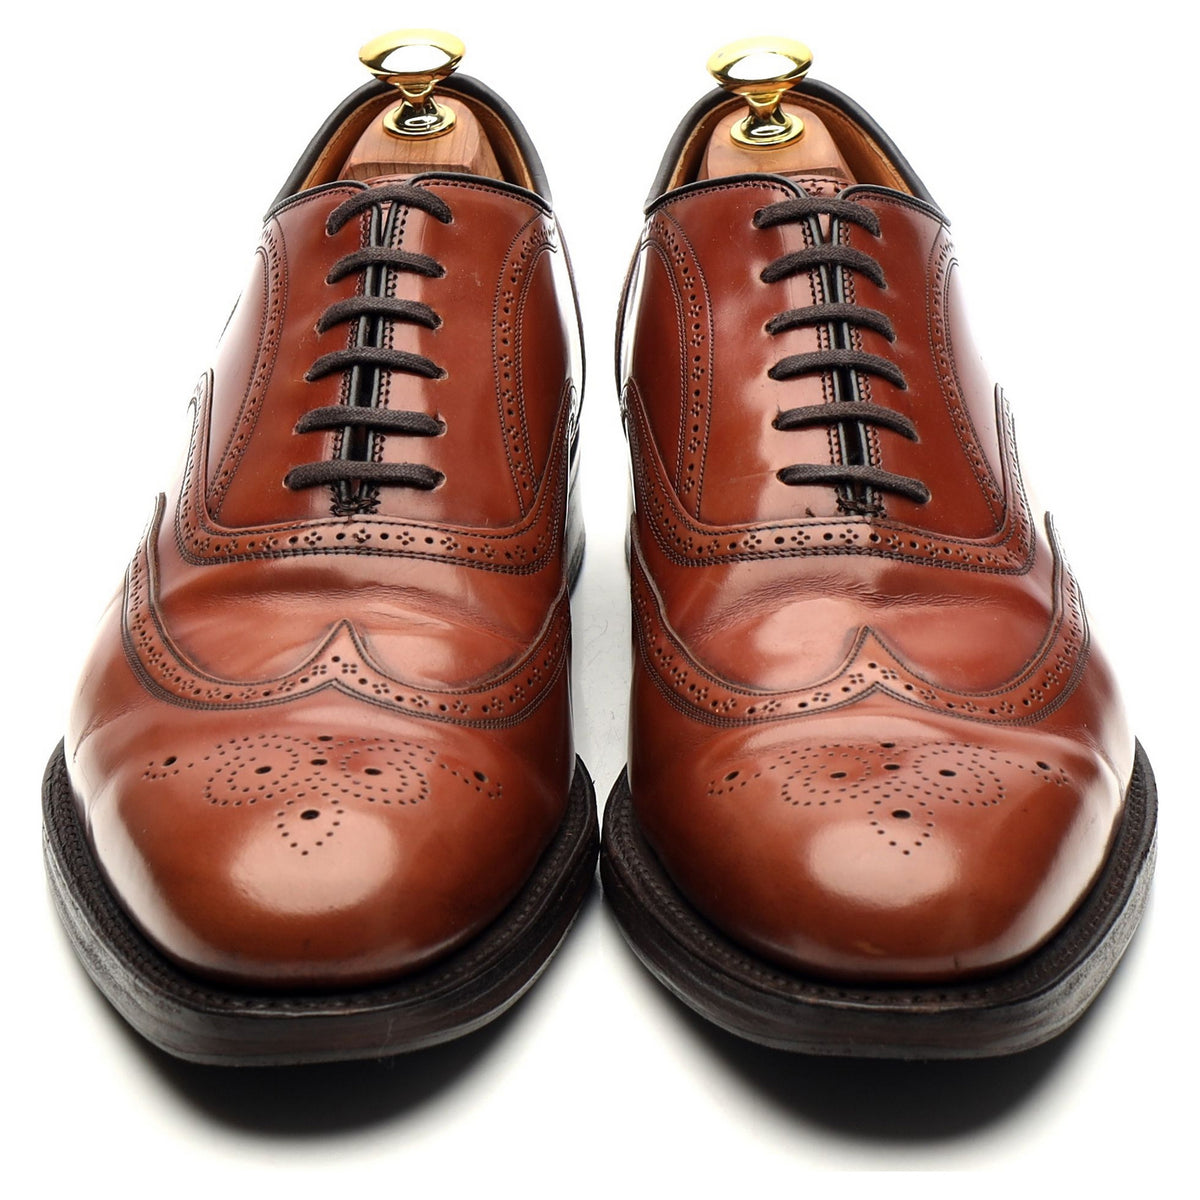 &#39;Gunthorpe&#39; Tan Brown Leather Oxford Brogues UK 8.5 G